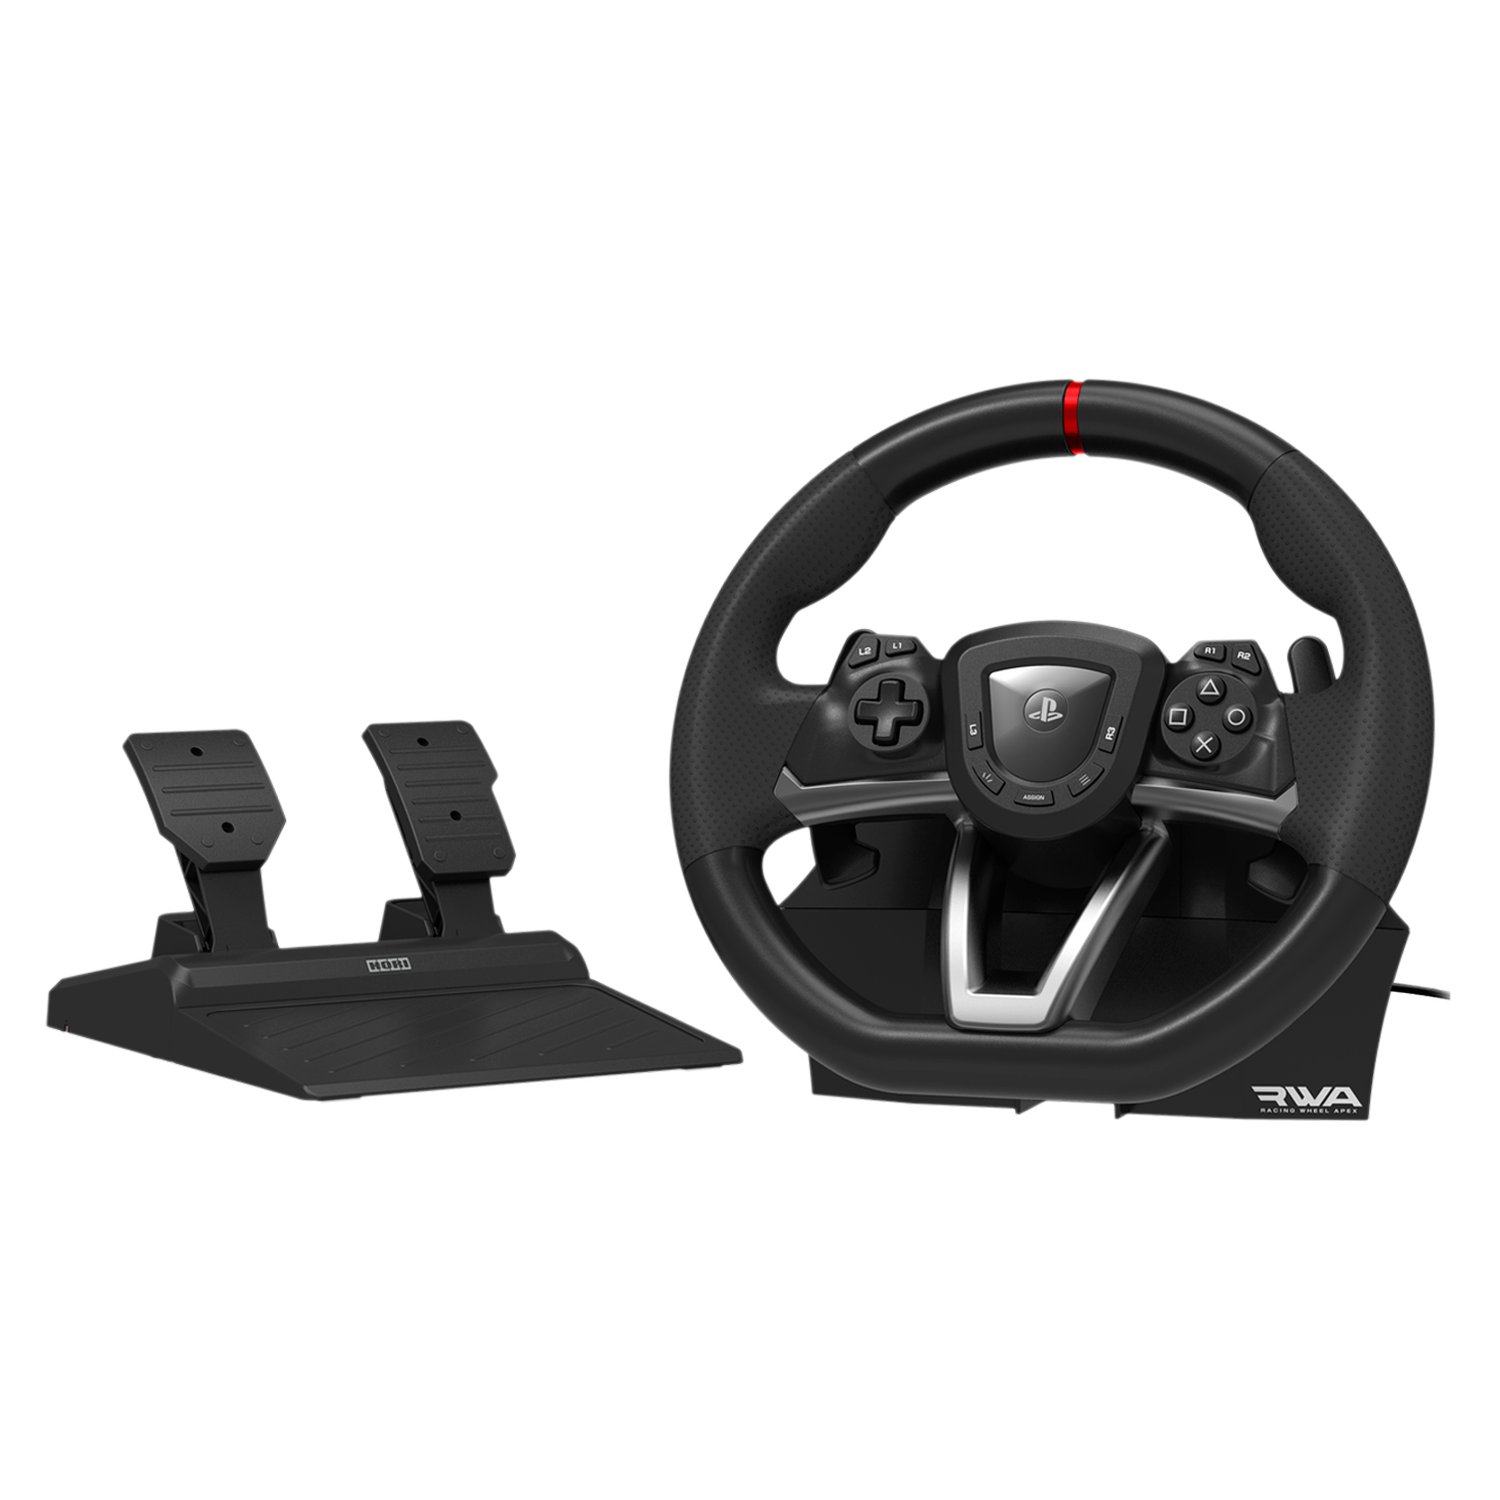 Volante Hori Racing Wheel Apex para PS5 - (SPF004U)